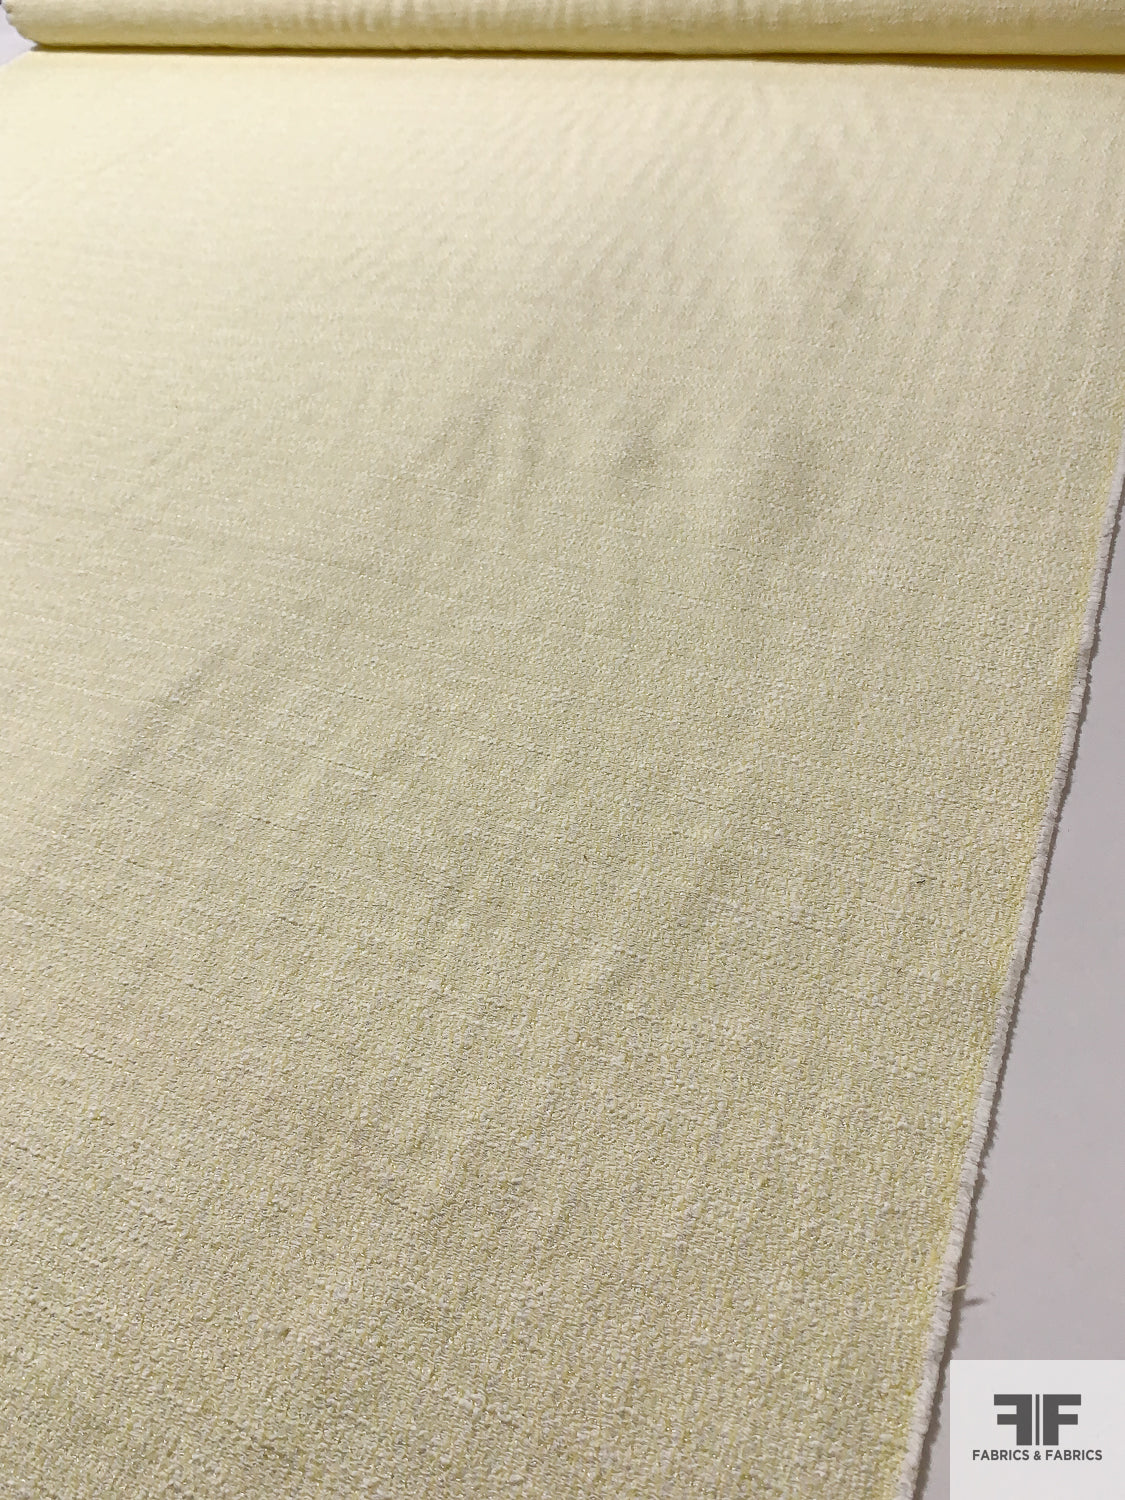 Classic Cotton Canvas Fabric | Sand Yellow